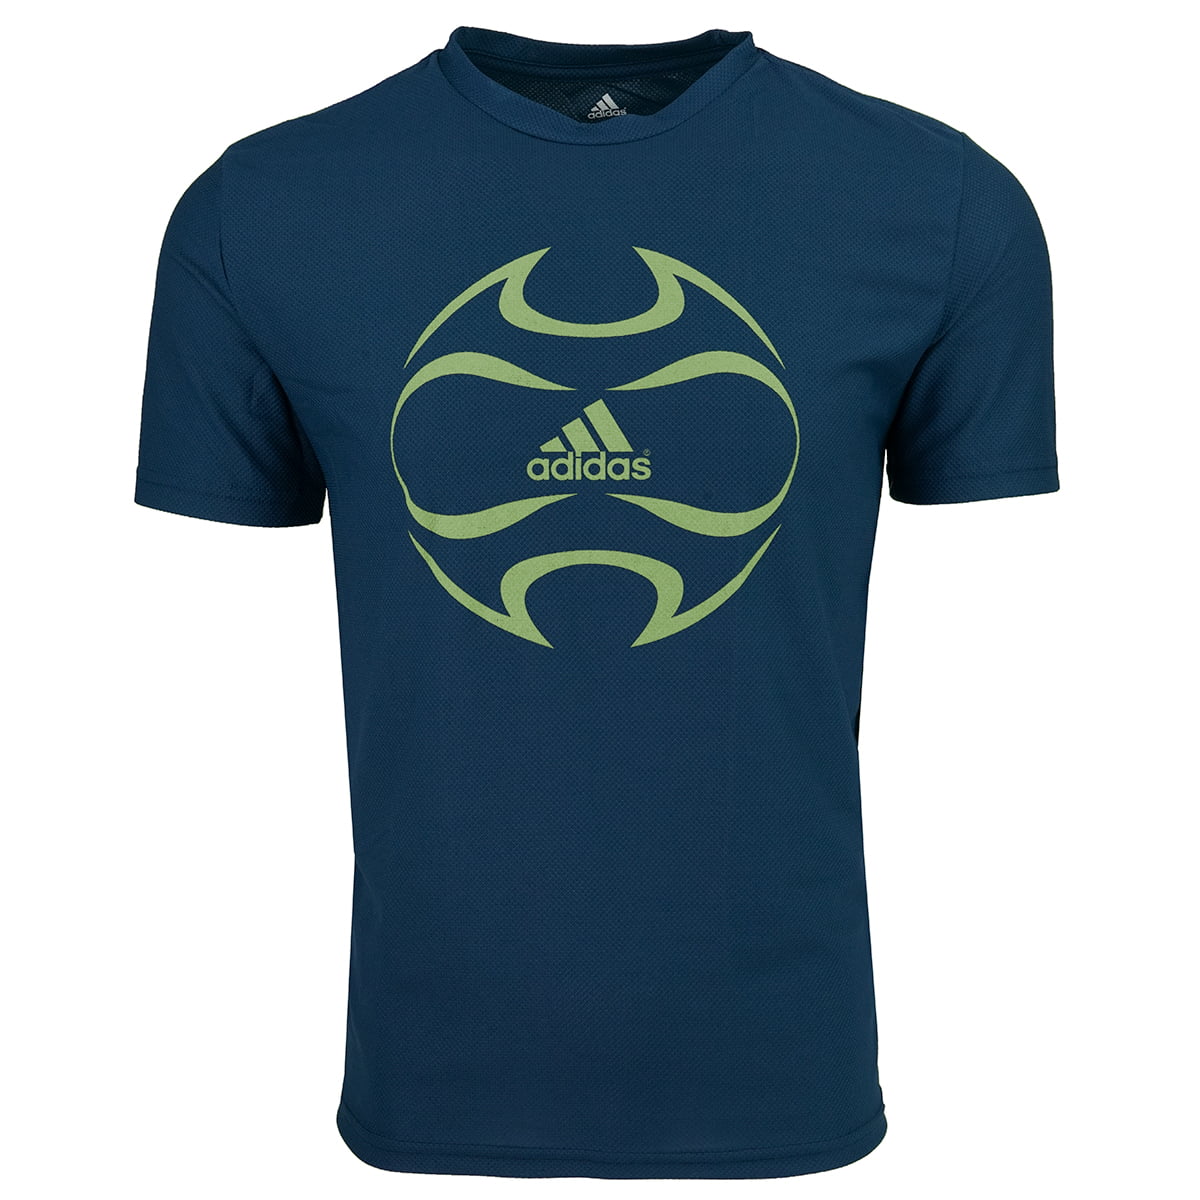 Adidas - adidas Men's Soccer Ball Mesh Graphic T-Shirt - Walmart.com